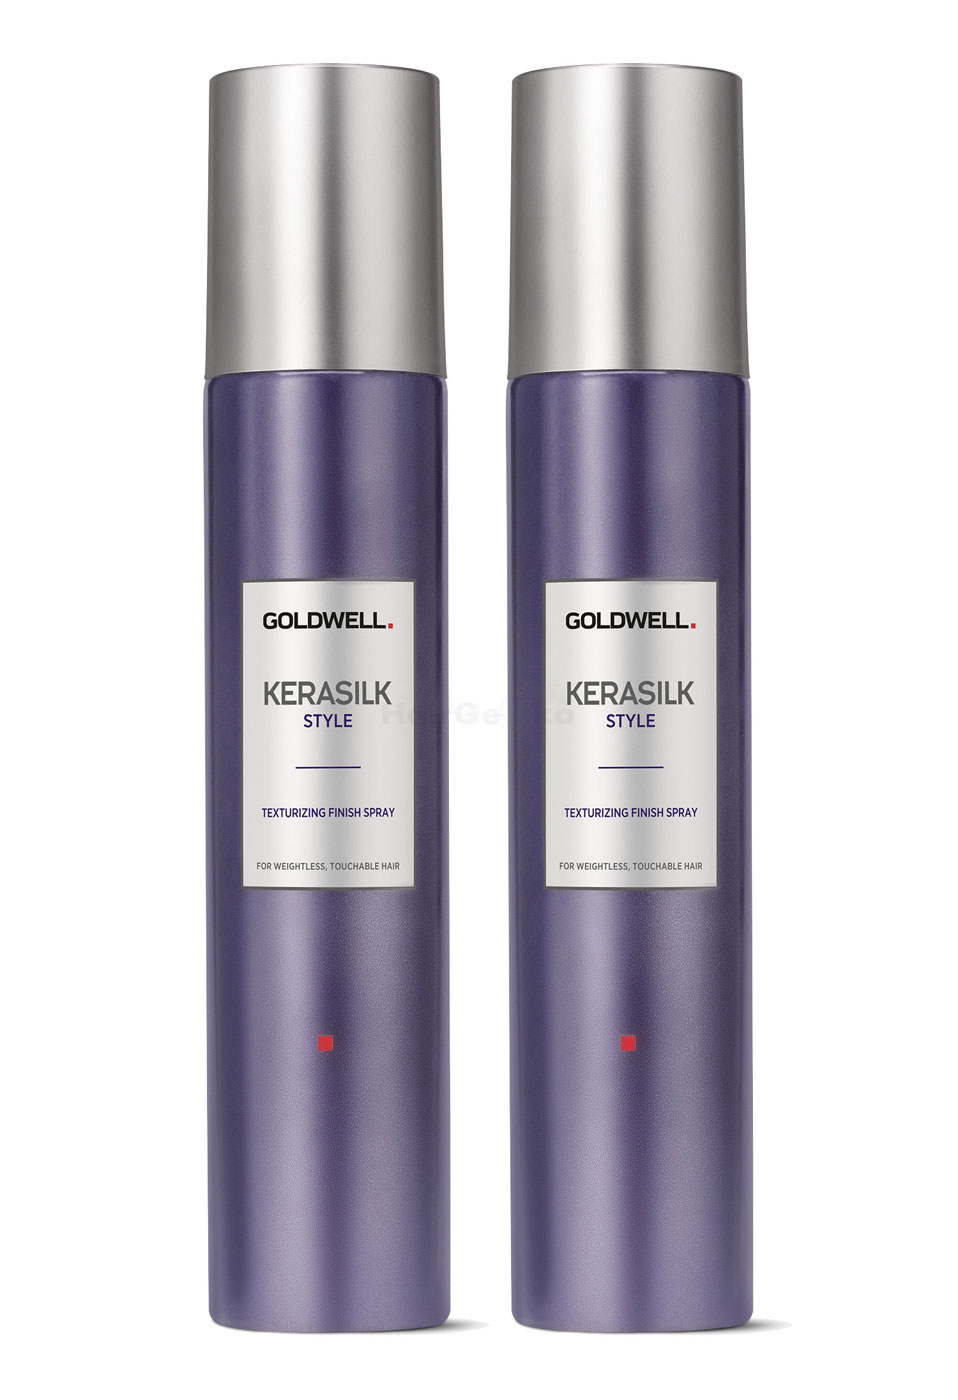 Goldwell Kerasilk Style Texturizing Finish Spray Set - 2x 75ml = 150ml